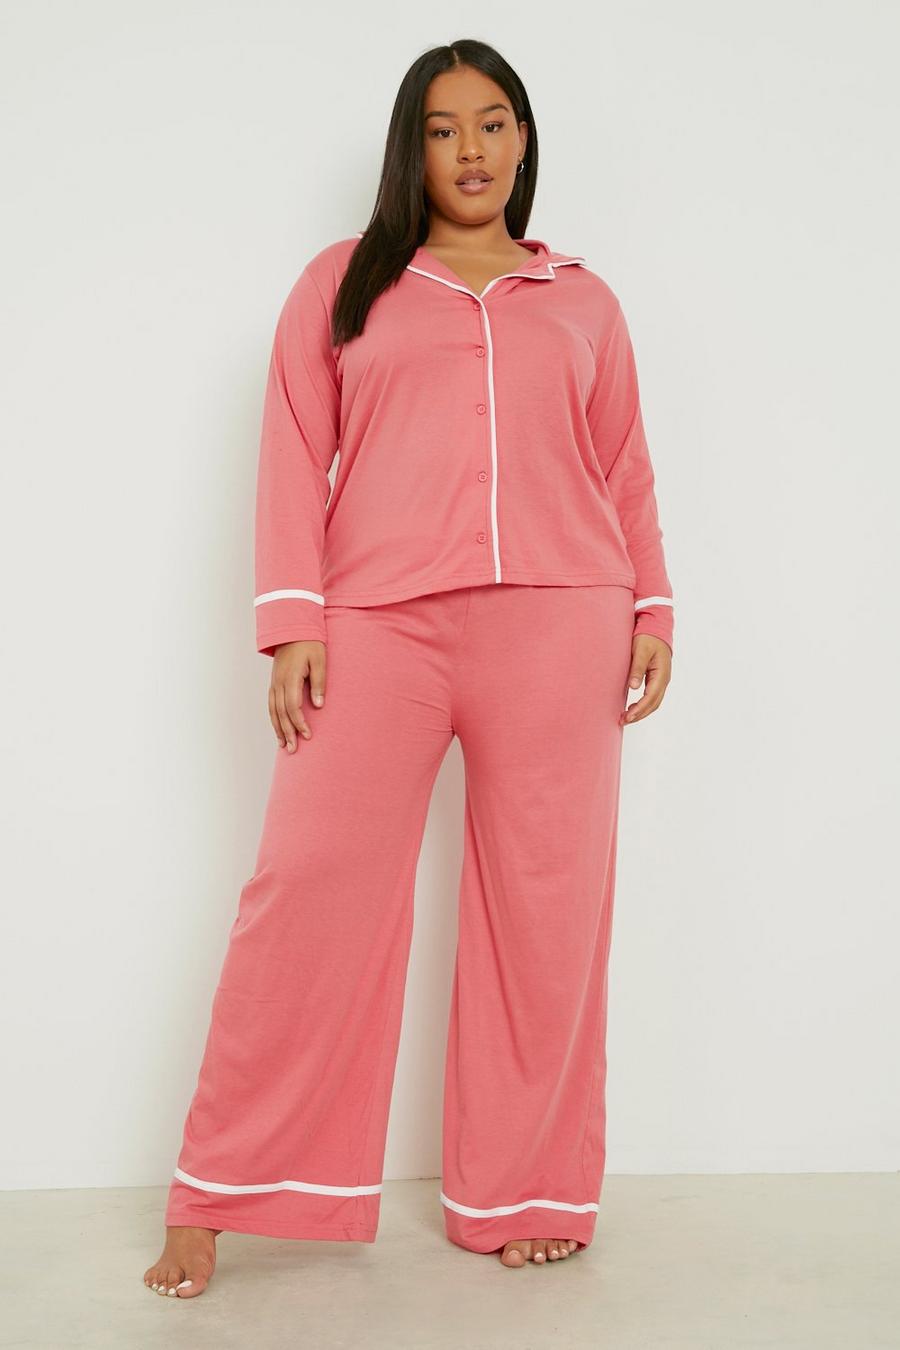 Set pigiama Plus Size a maniche lunghe in jersey con bottoni, Hot pink rosa